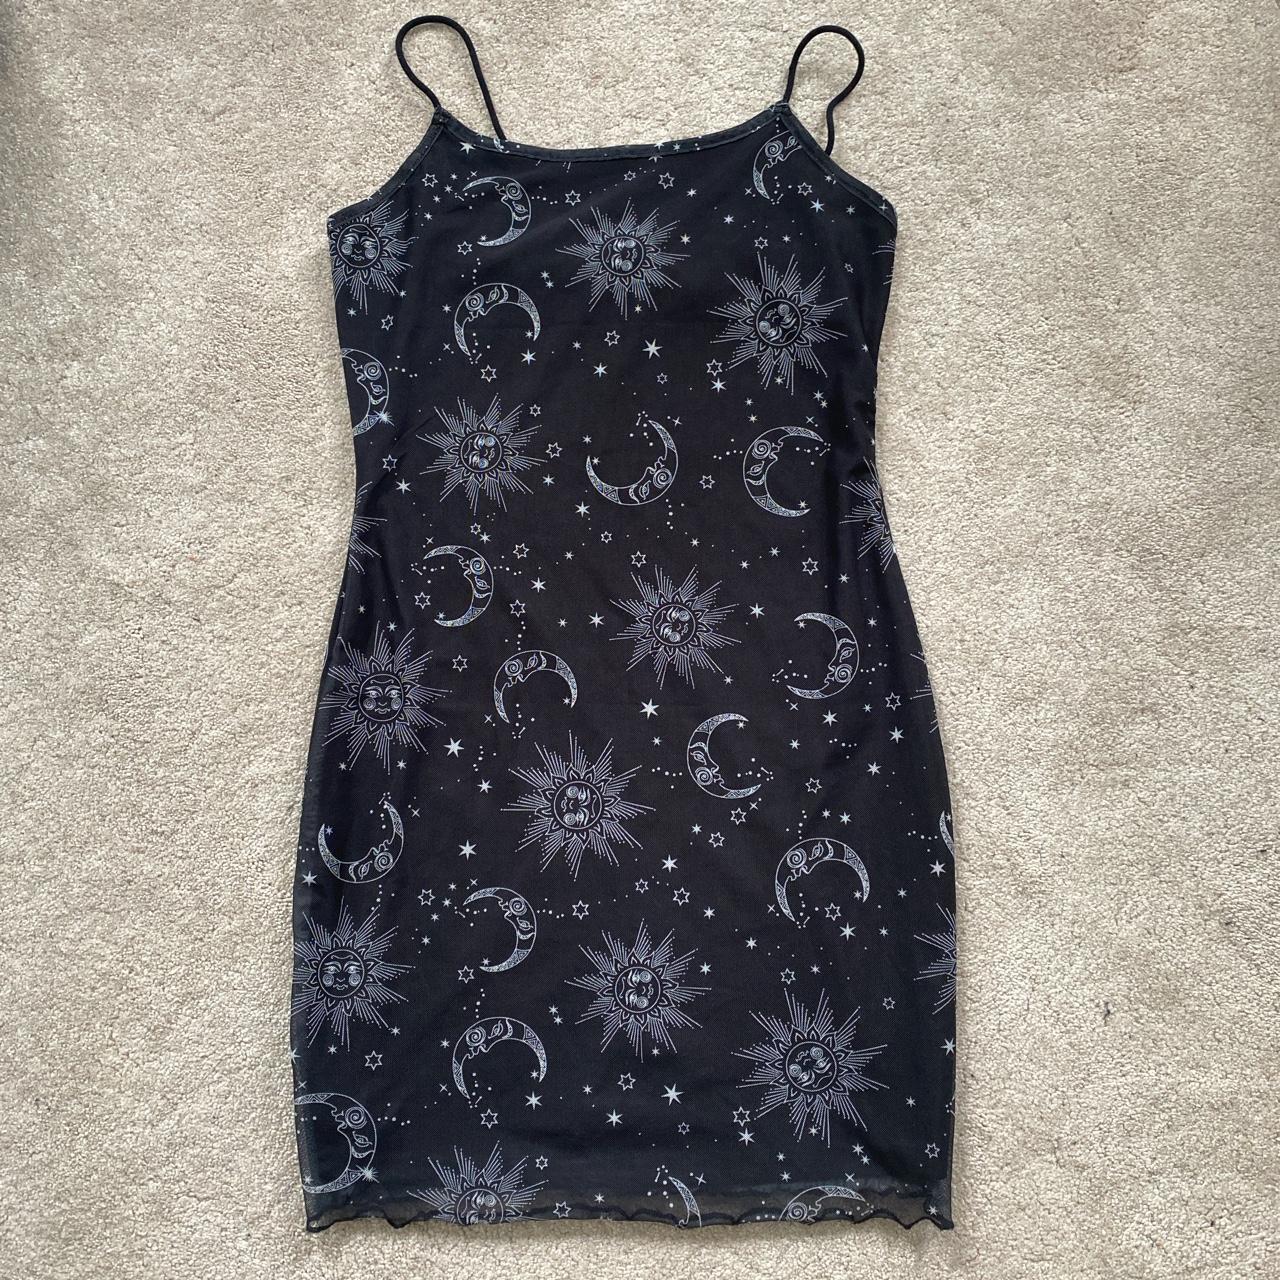 Black sun and moon patterned mesh dress - not... - Depop